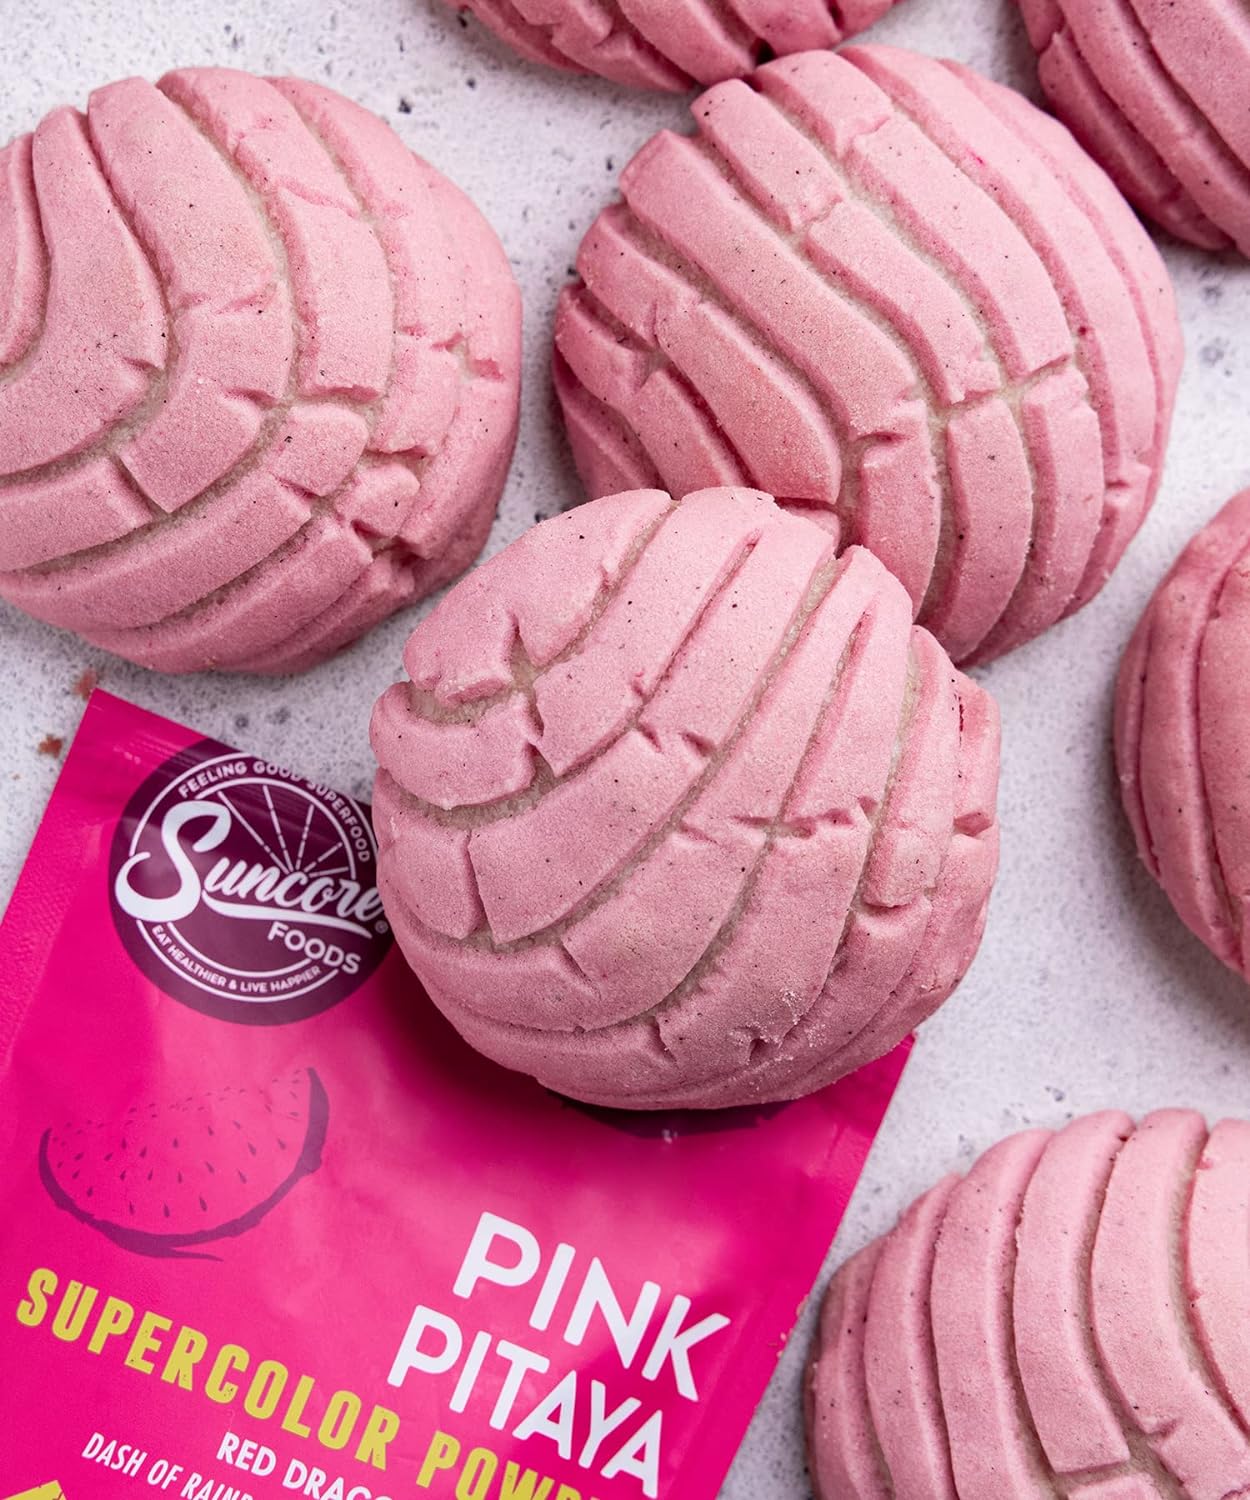 Suncore Foods Pink Pitaya Powder, Pink Food Coloring Powder, Gluten-Free, Non-GMO, 5oz (1 Pack) : Grocery & Gourmet Food